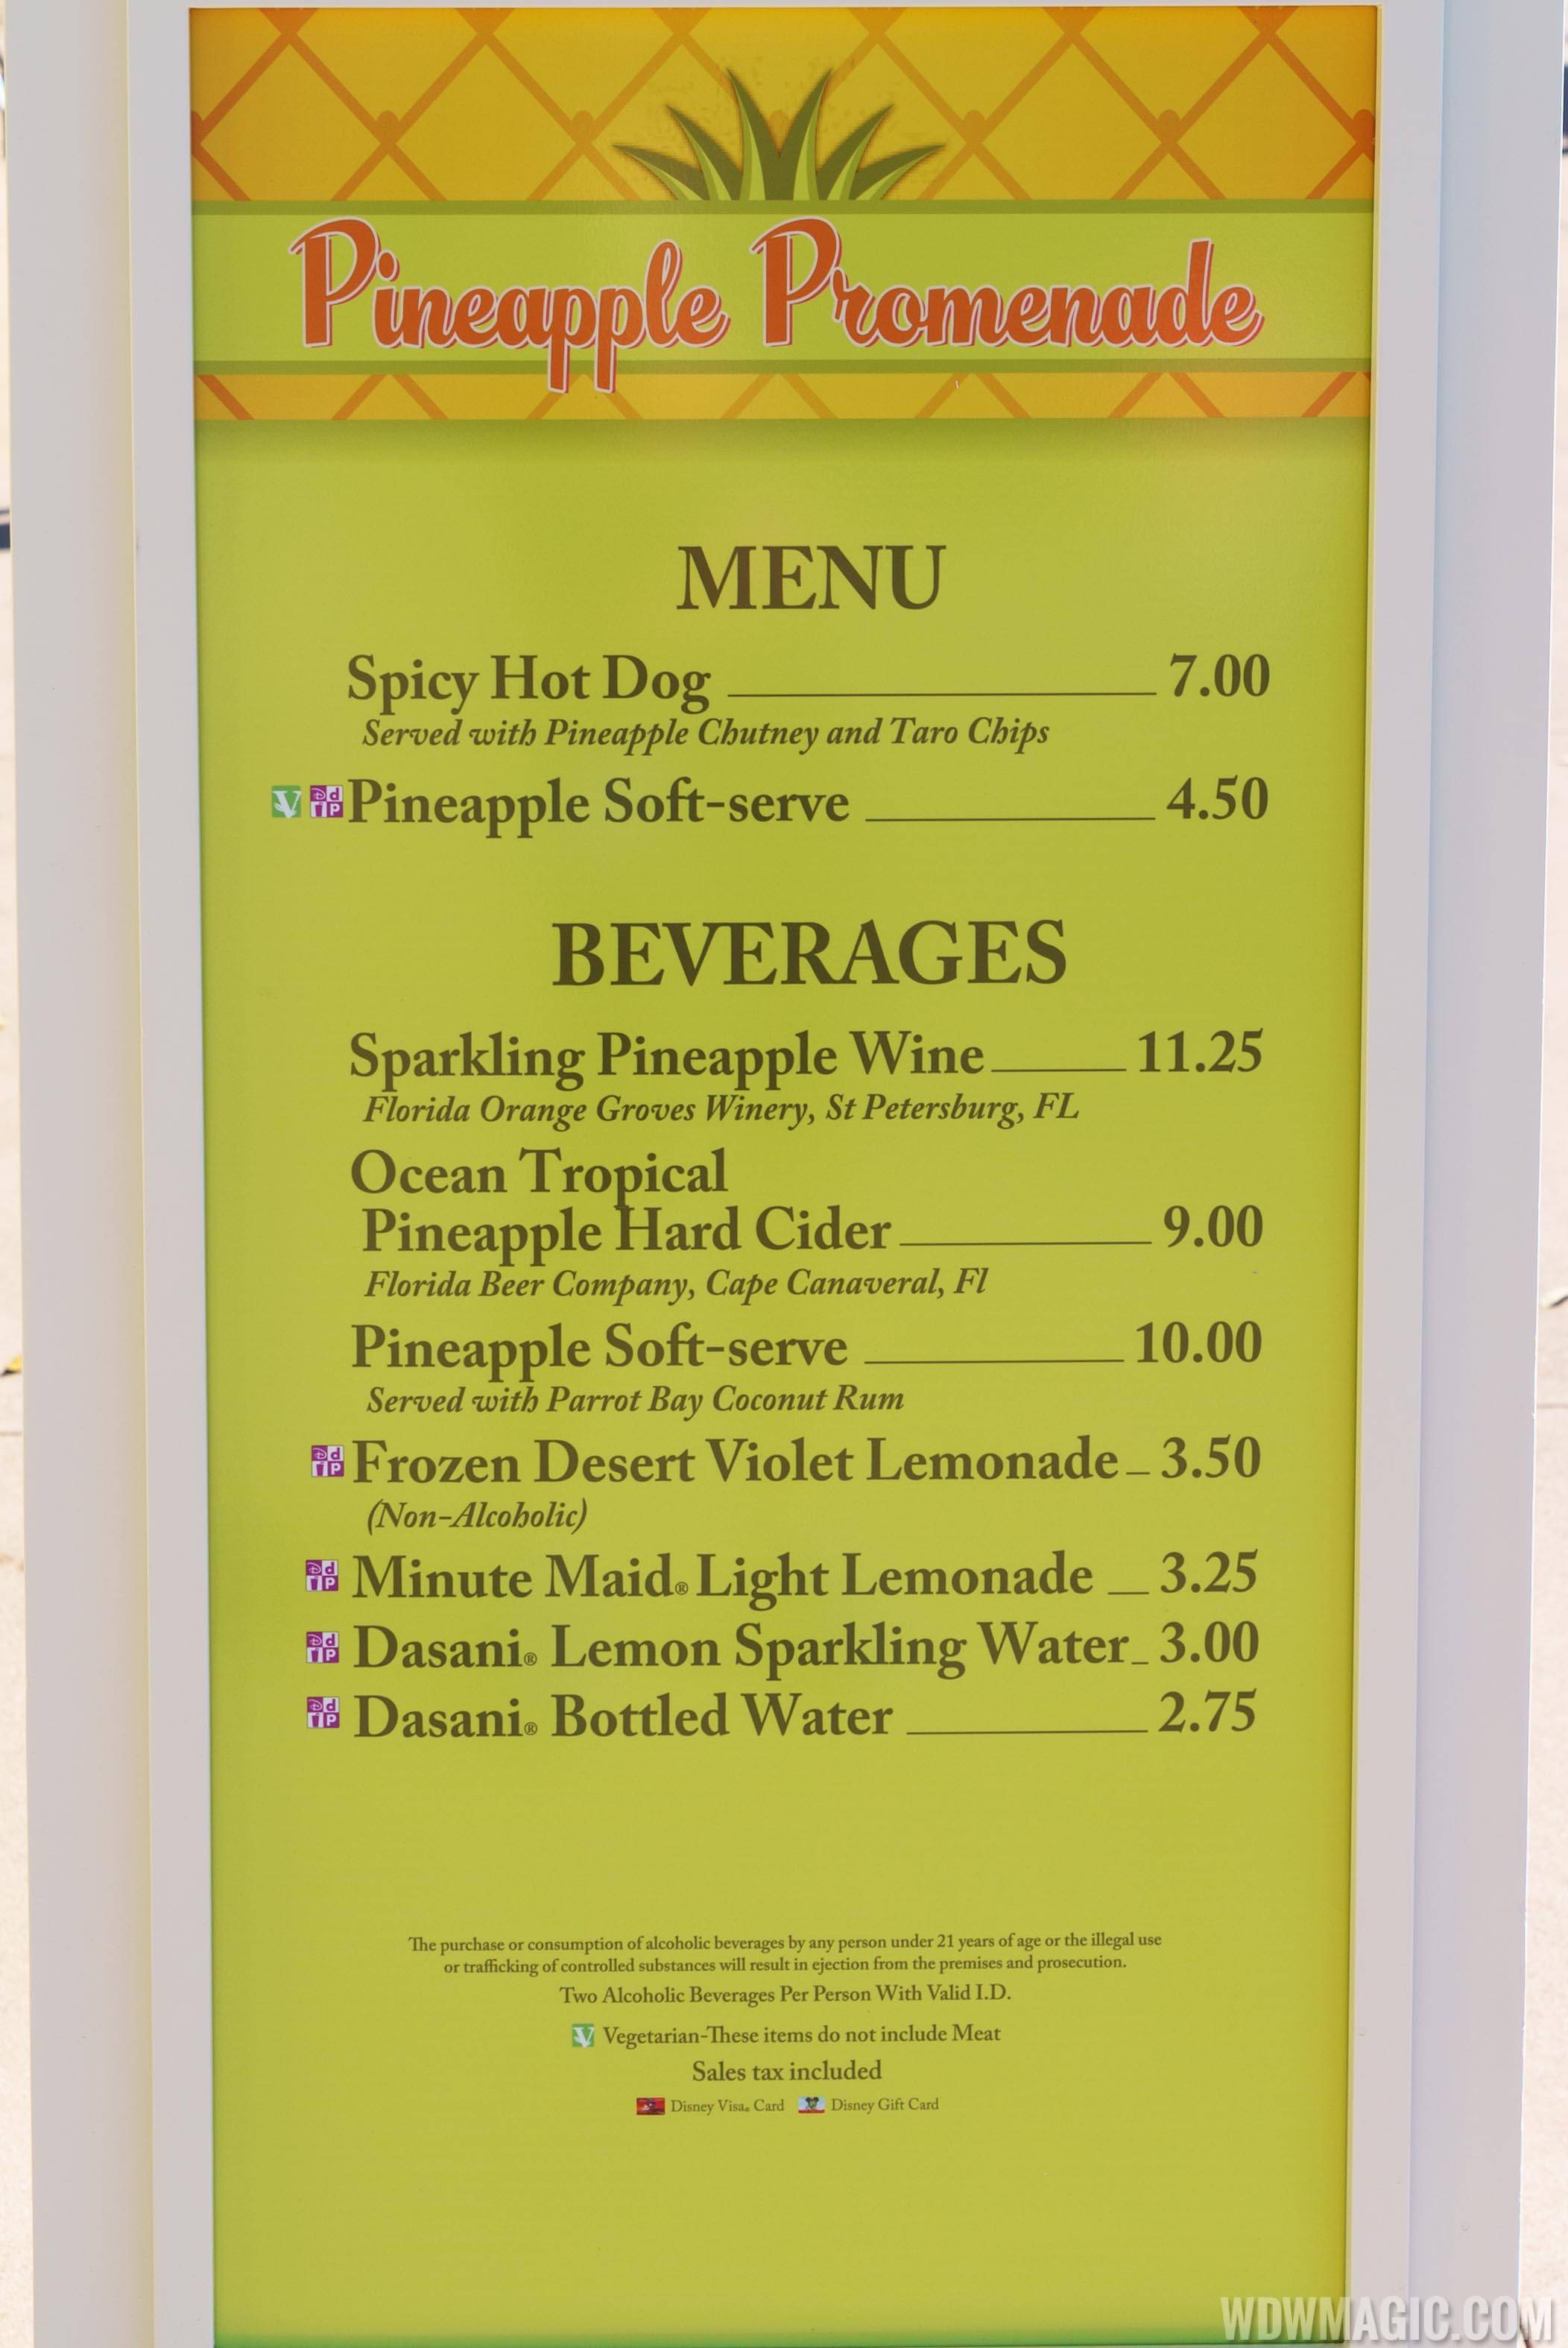 2016 Epcot Flower and Garden Festival Outdoor Kitchen kiosks - Pineapple Promenade menu